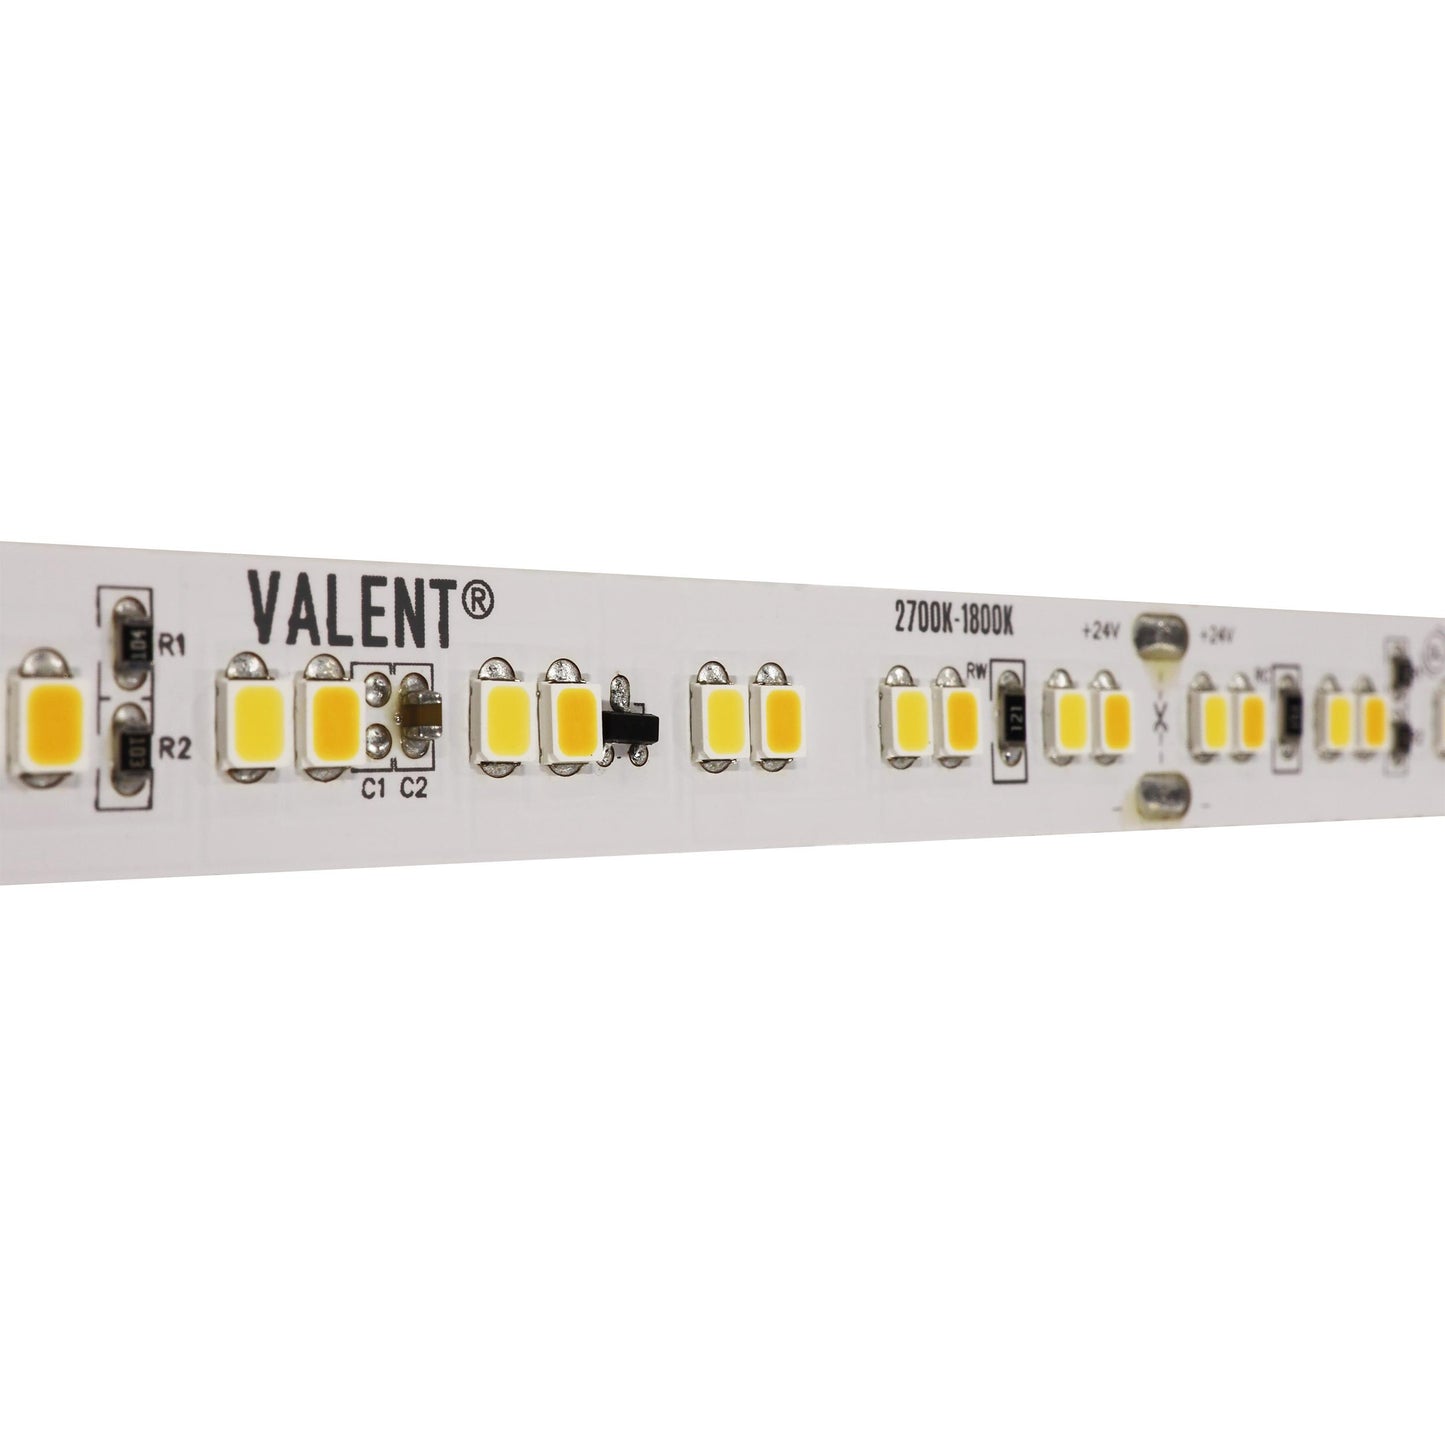 Diode LED DI-24V-VL1-WD2718-100 100ft 1.54W/ft Valent Warm Dim LED Tape Light 2700K-1800K 24V